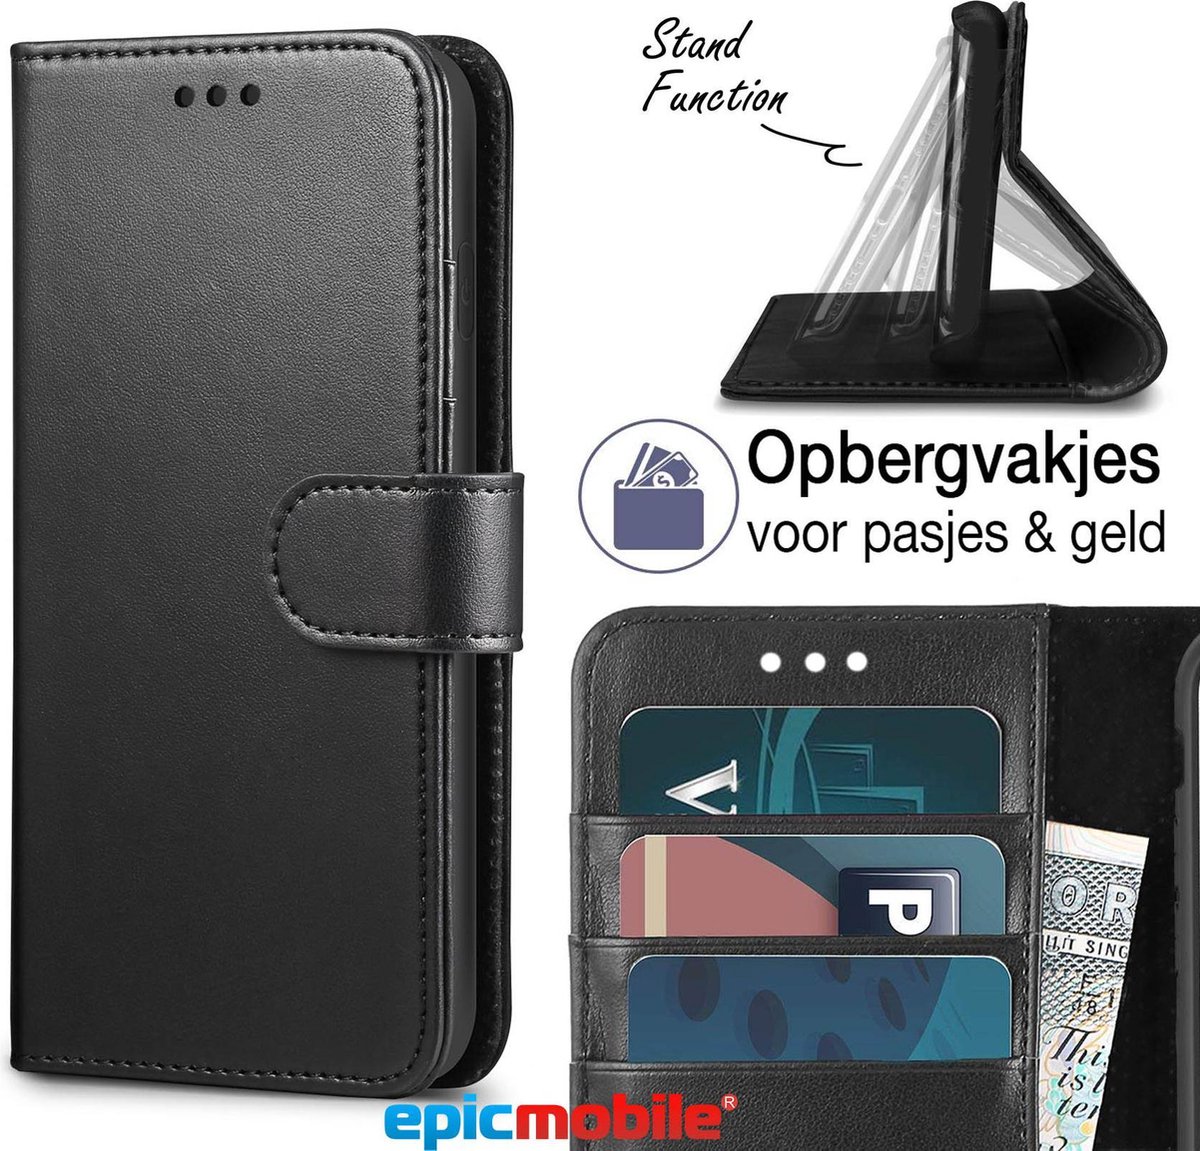 Epicmobile - iPhone XR Boek hoesje met pasjeshouder - Luxe portemonnee hoesje - Zwart